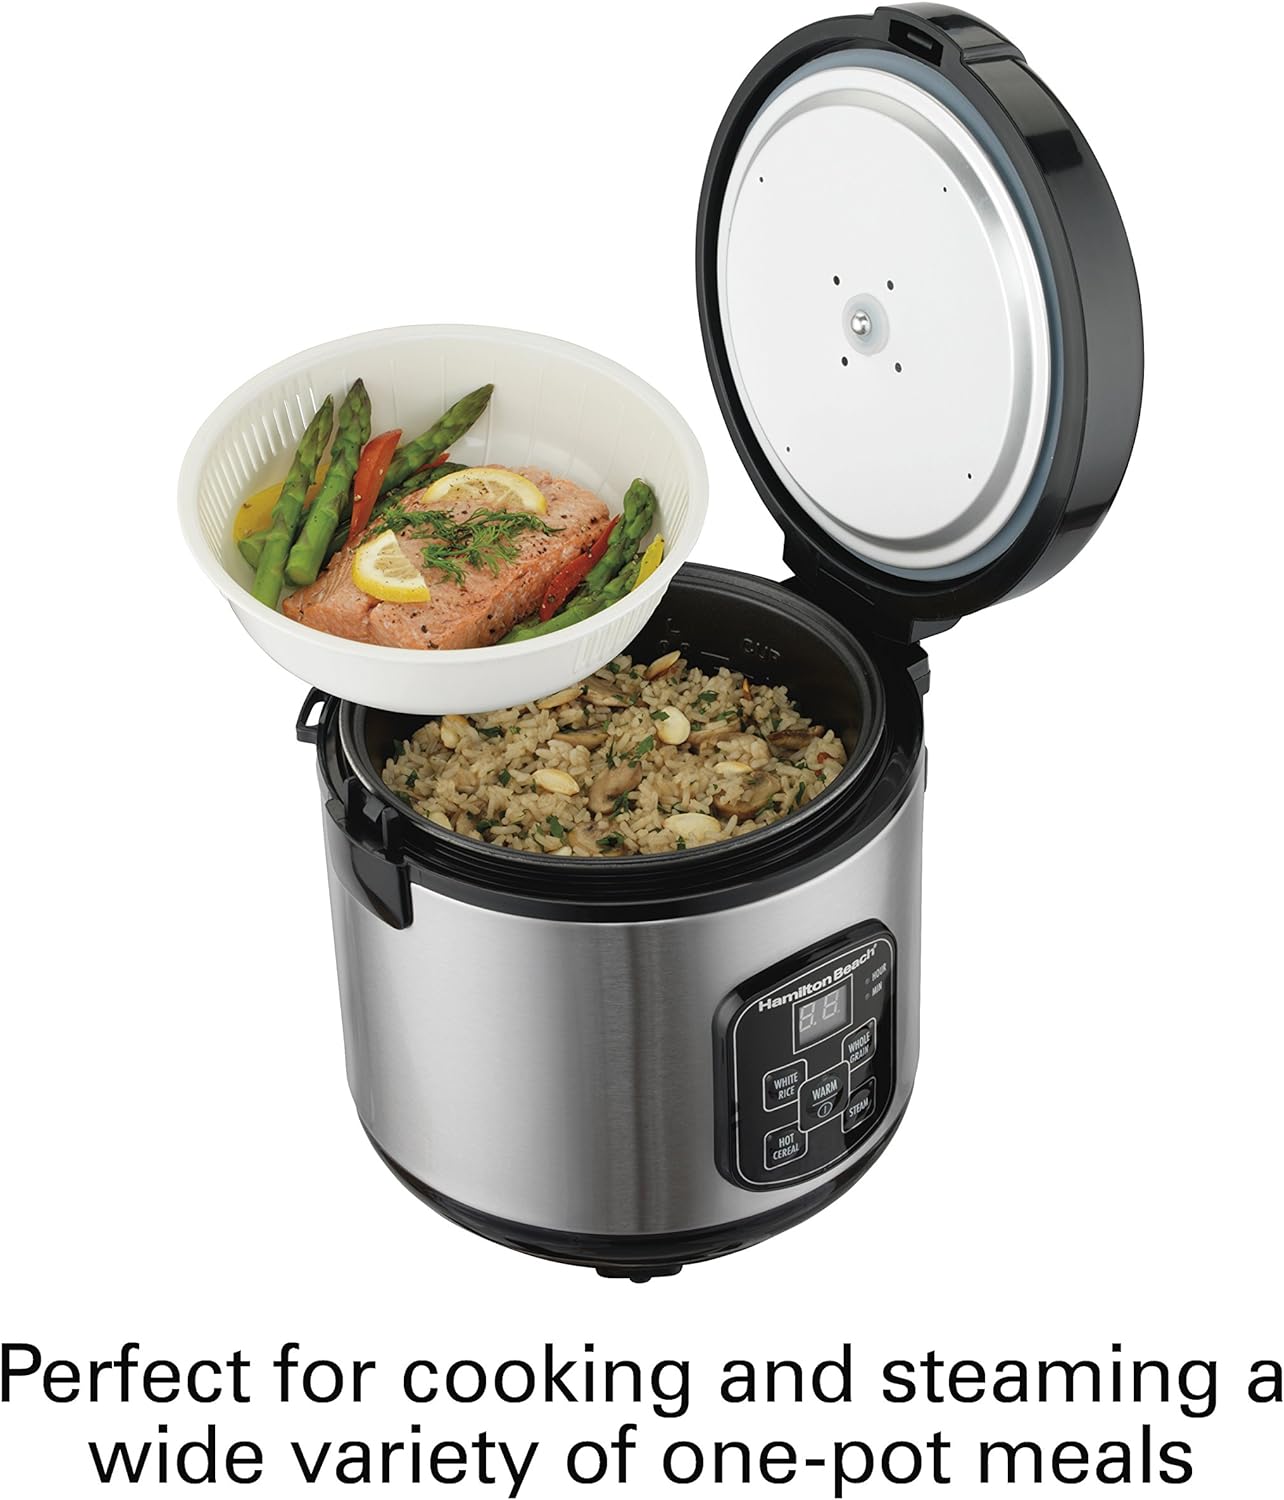 Hamilton Beach Digital Programmable Rice Cooker  Food Steamer (37518) and Hamilton Beach Wave Action Blender (58148A)